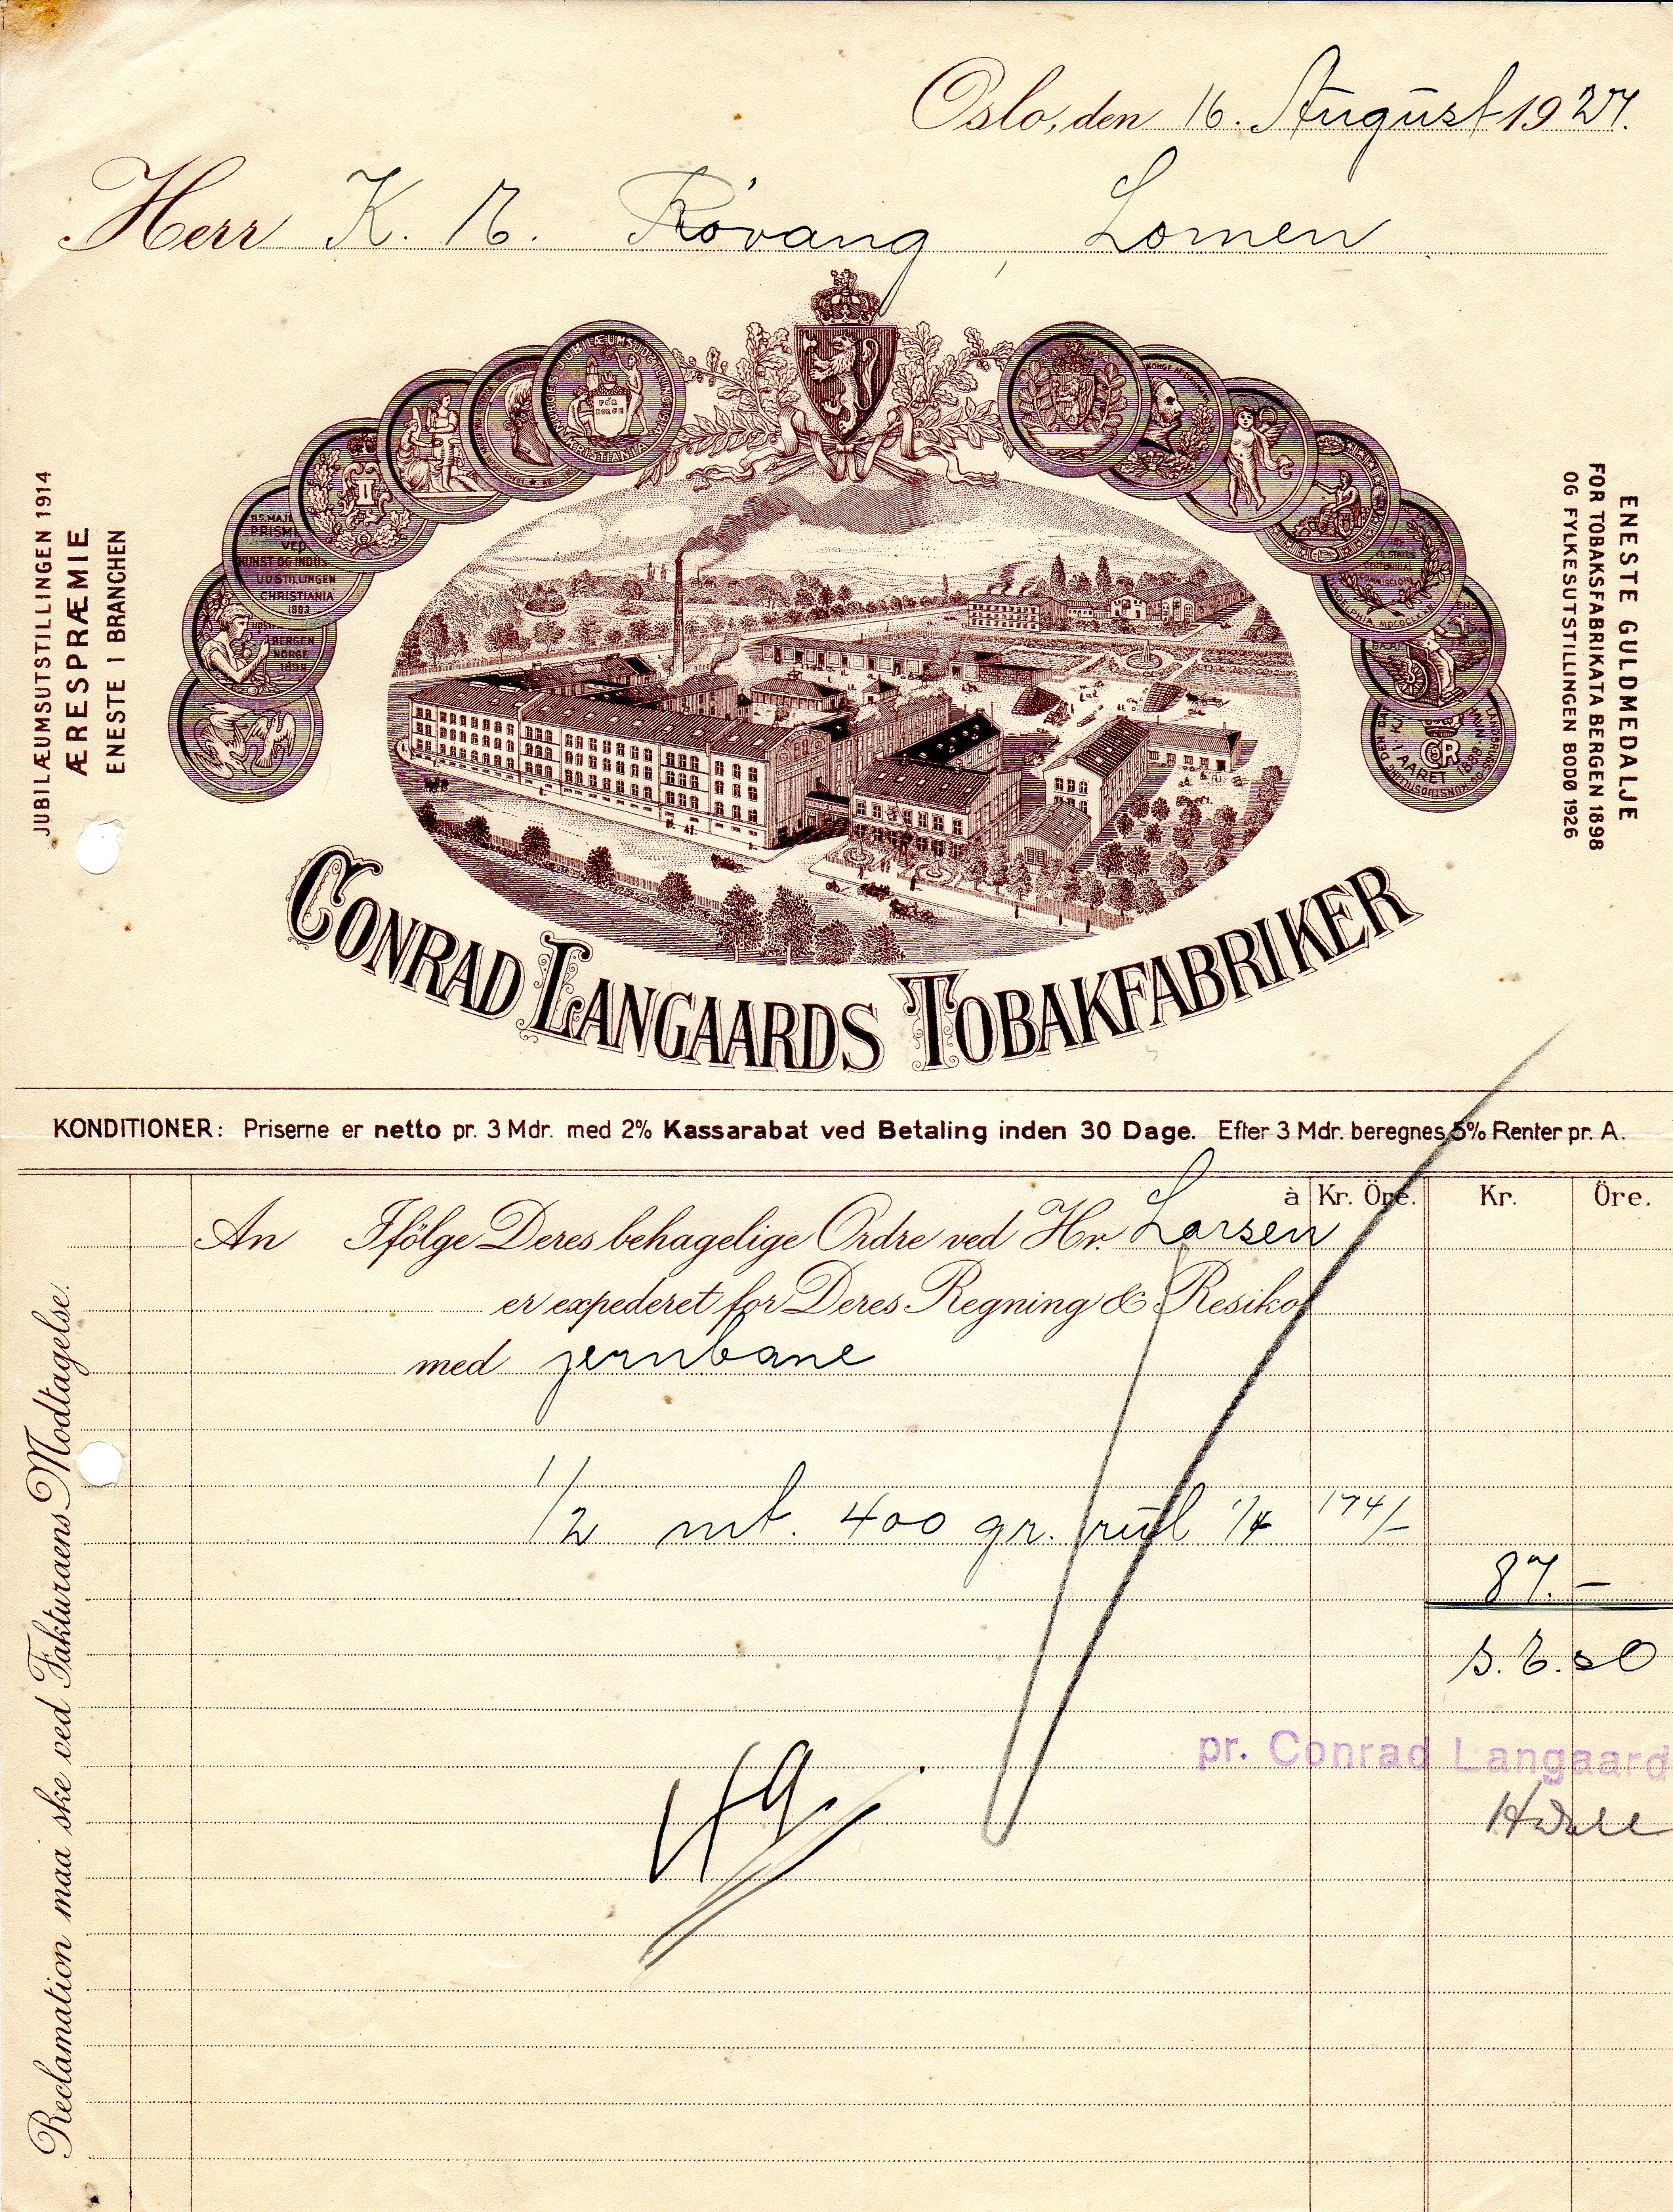 Conrad Langgaards Tobakfabriker 1927